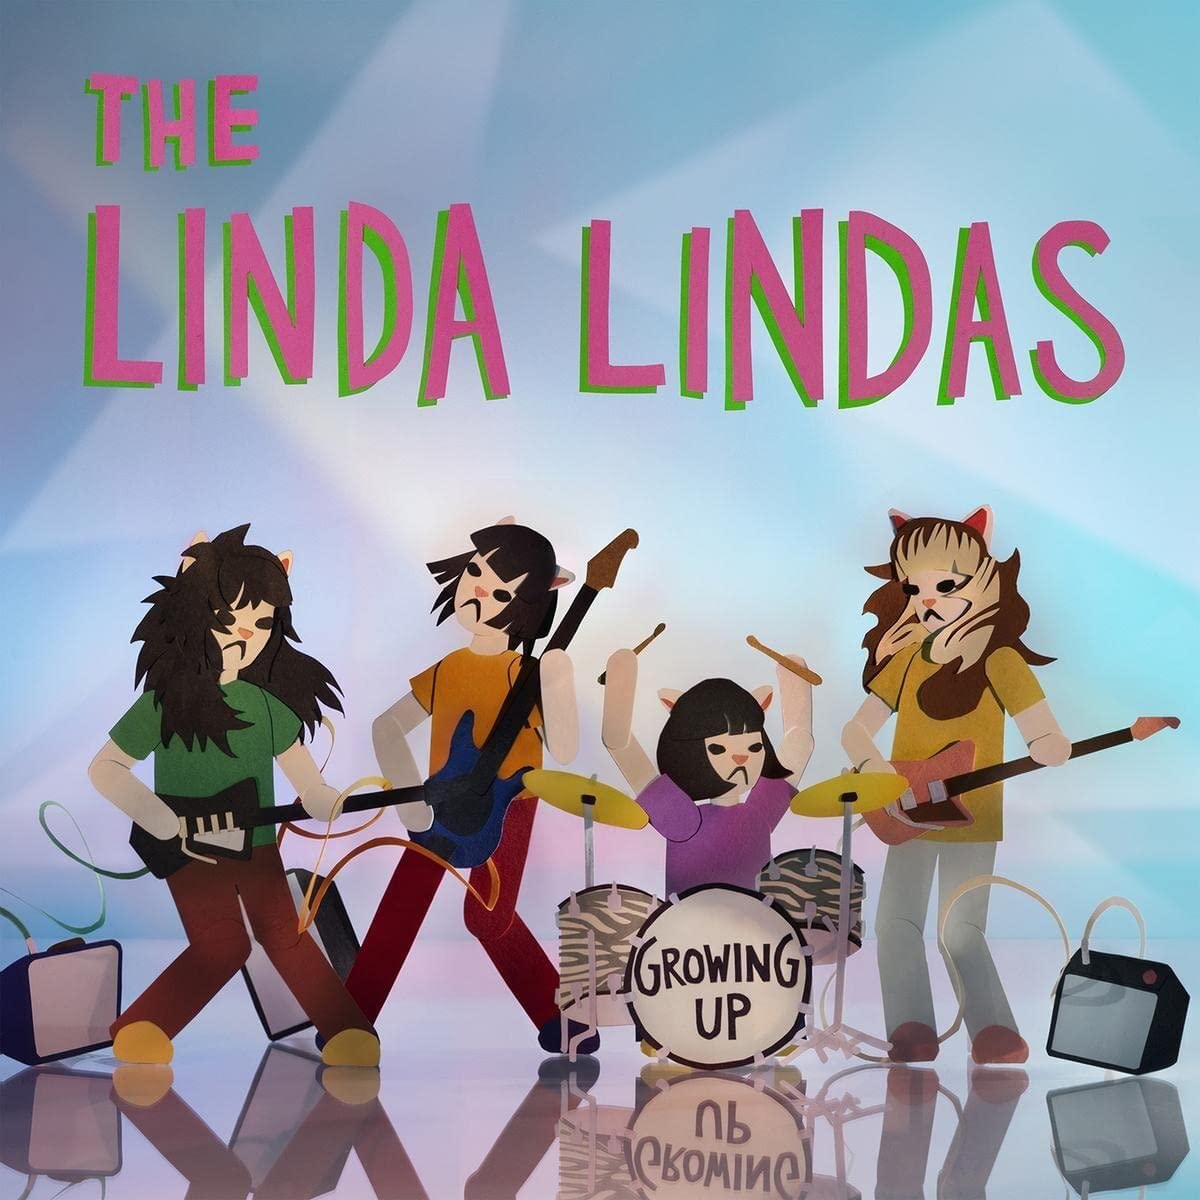 The Linda Lindas "Growing Up" LP